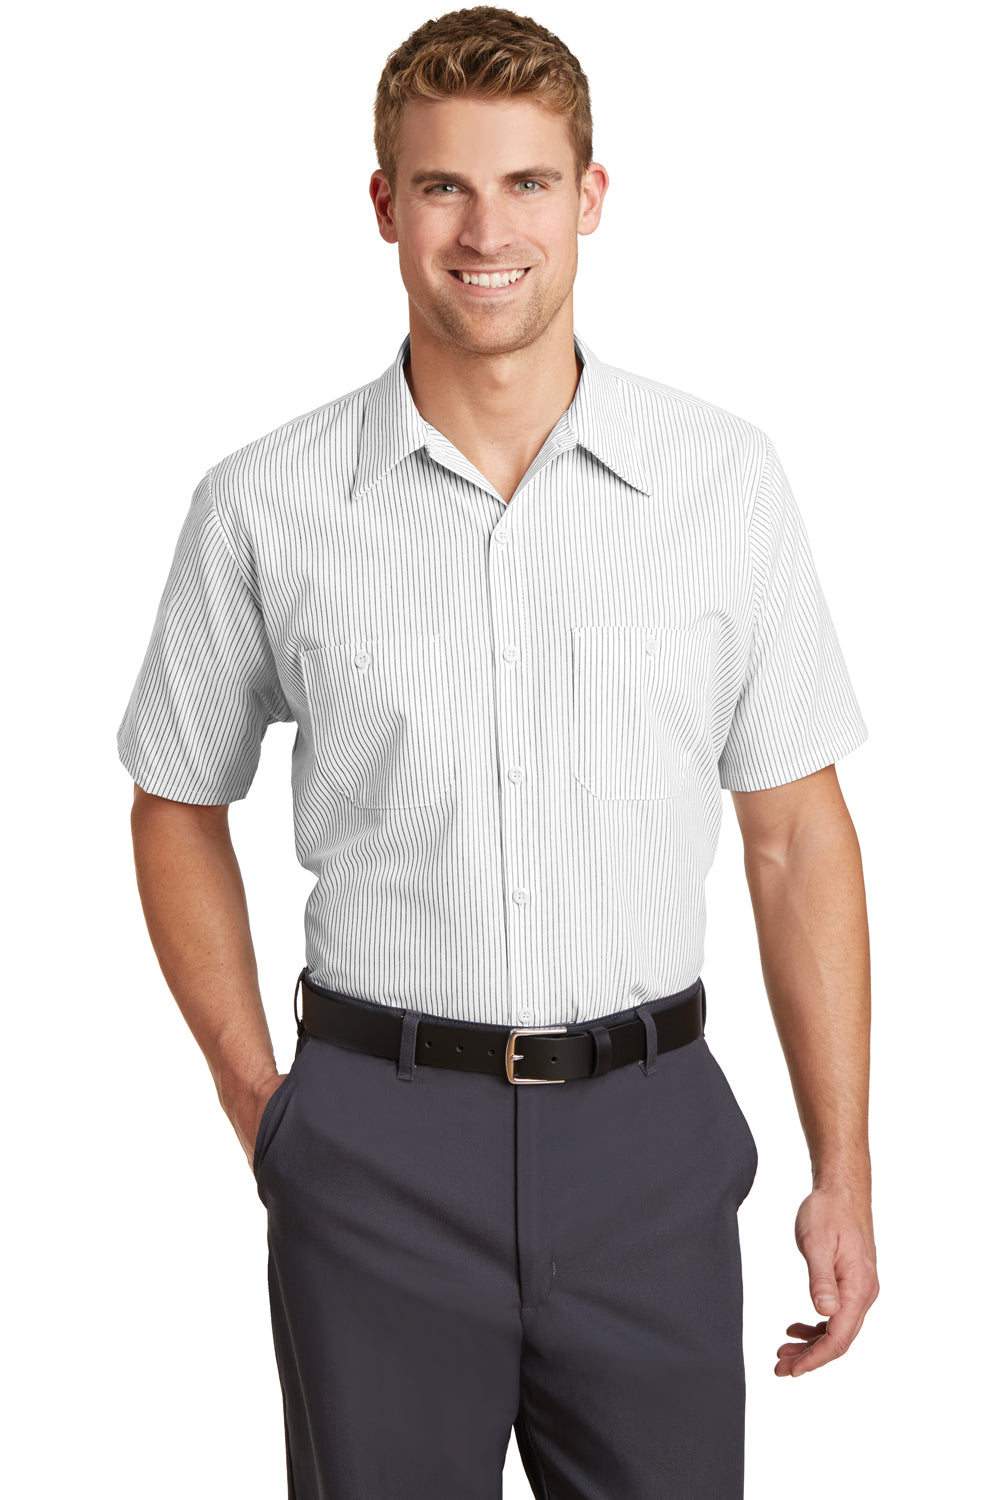 Red Kap CS20/CS20LONG Mens Industrial Moisture Wicking Short Sleeve Button Down Shirt w/ Double Pockets Grey/White Front